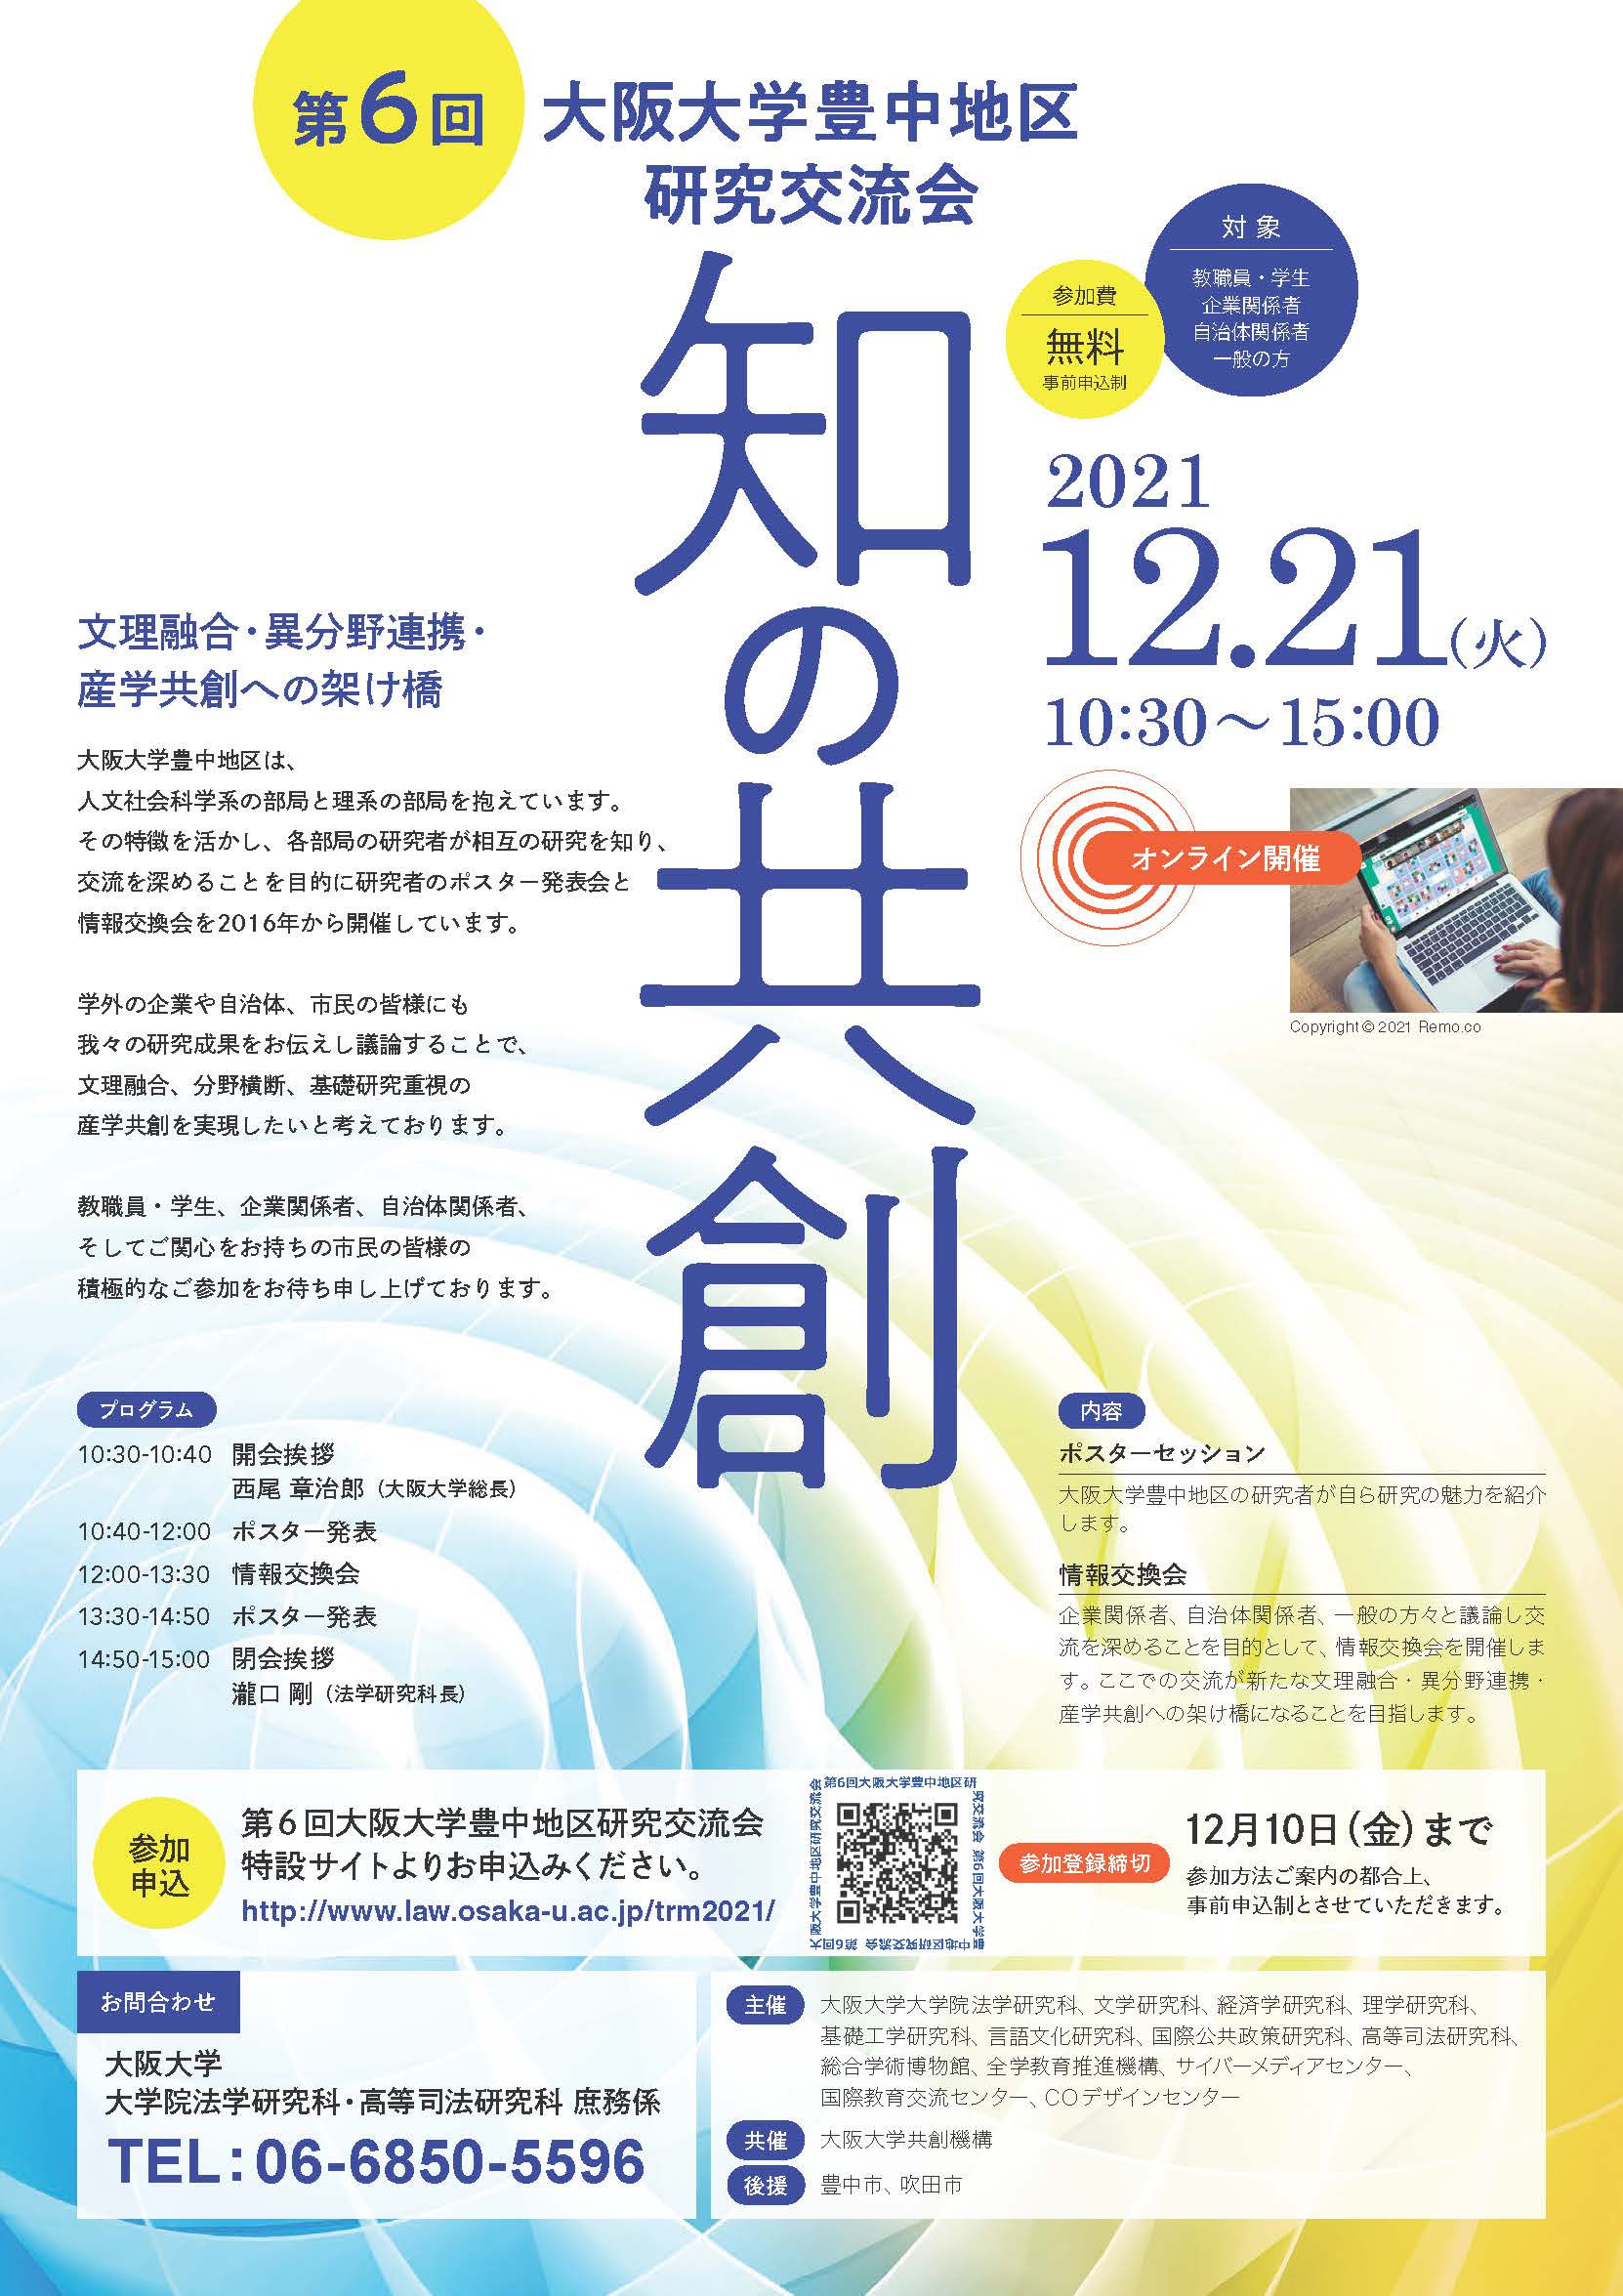 6th Osaka University Toyonaka Information Exchange Meeting (Online)